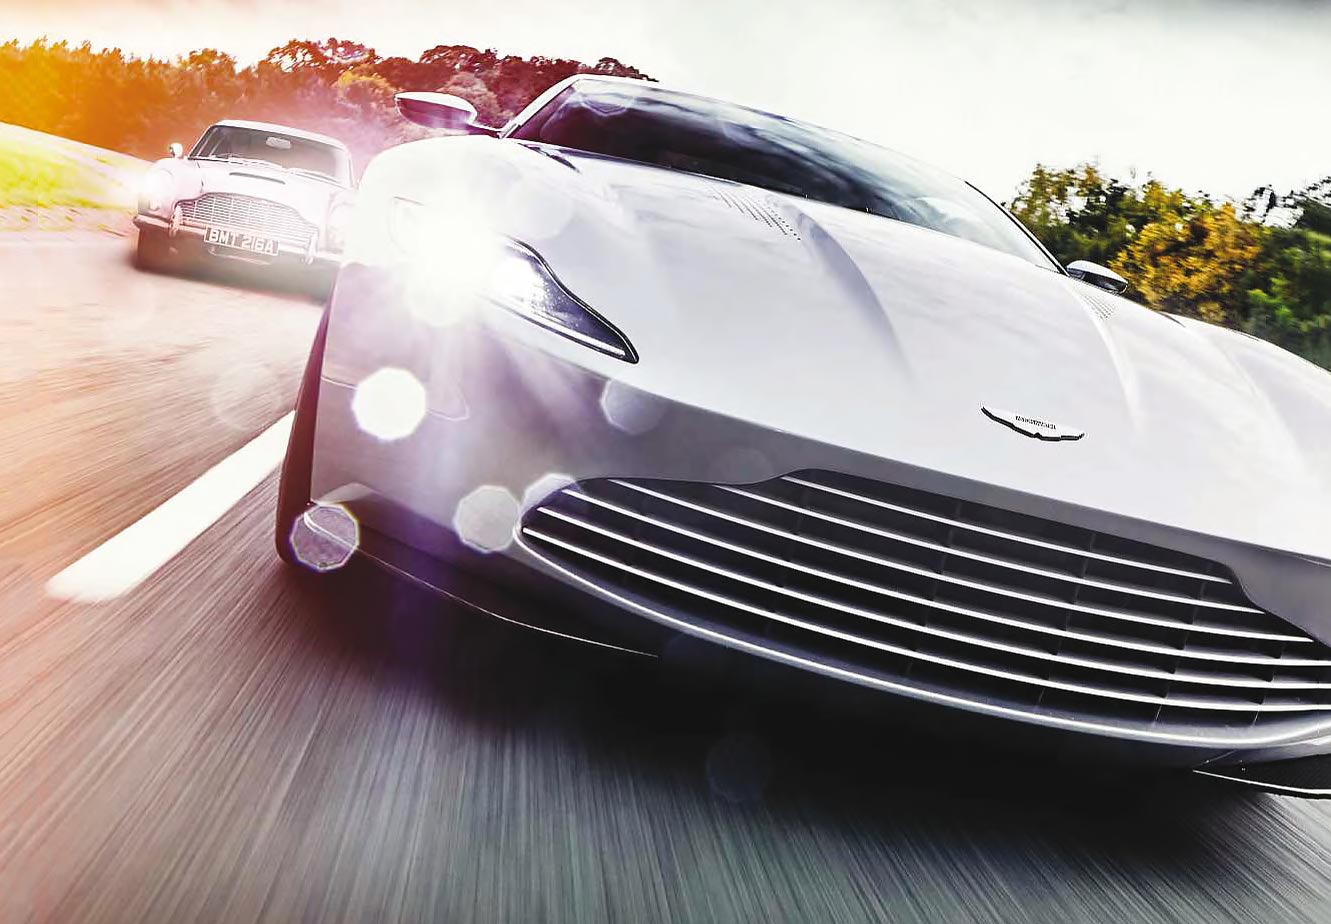 2015 Aston Martin DB10 especially for Spectre - road drive